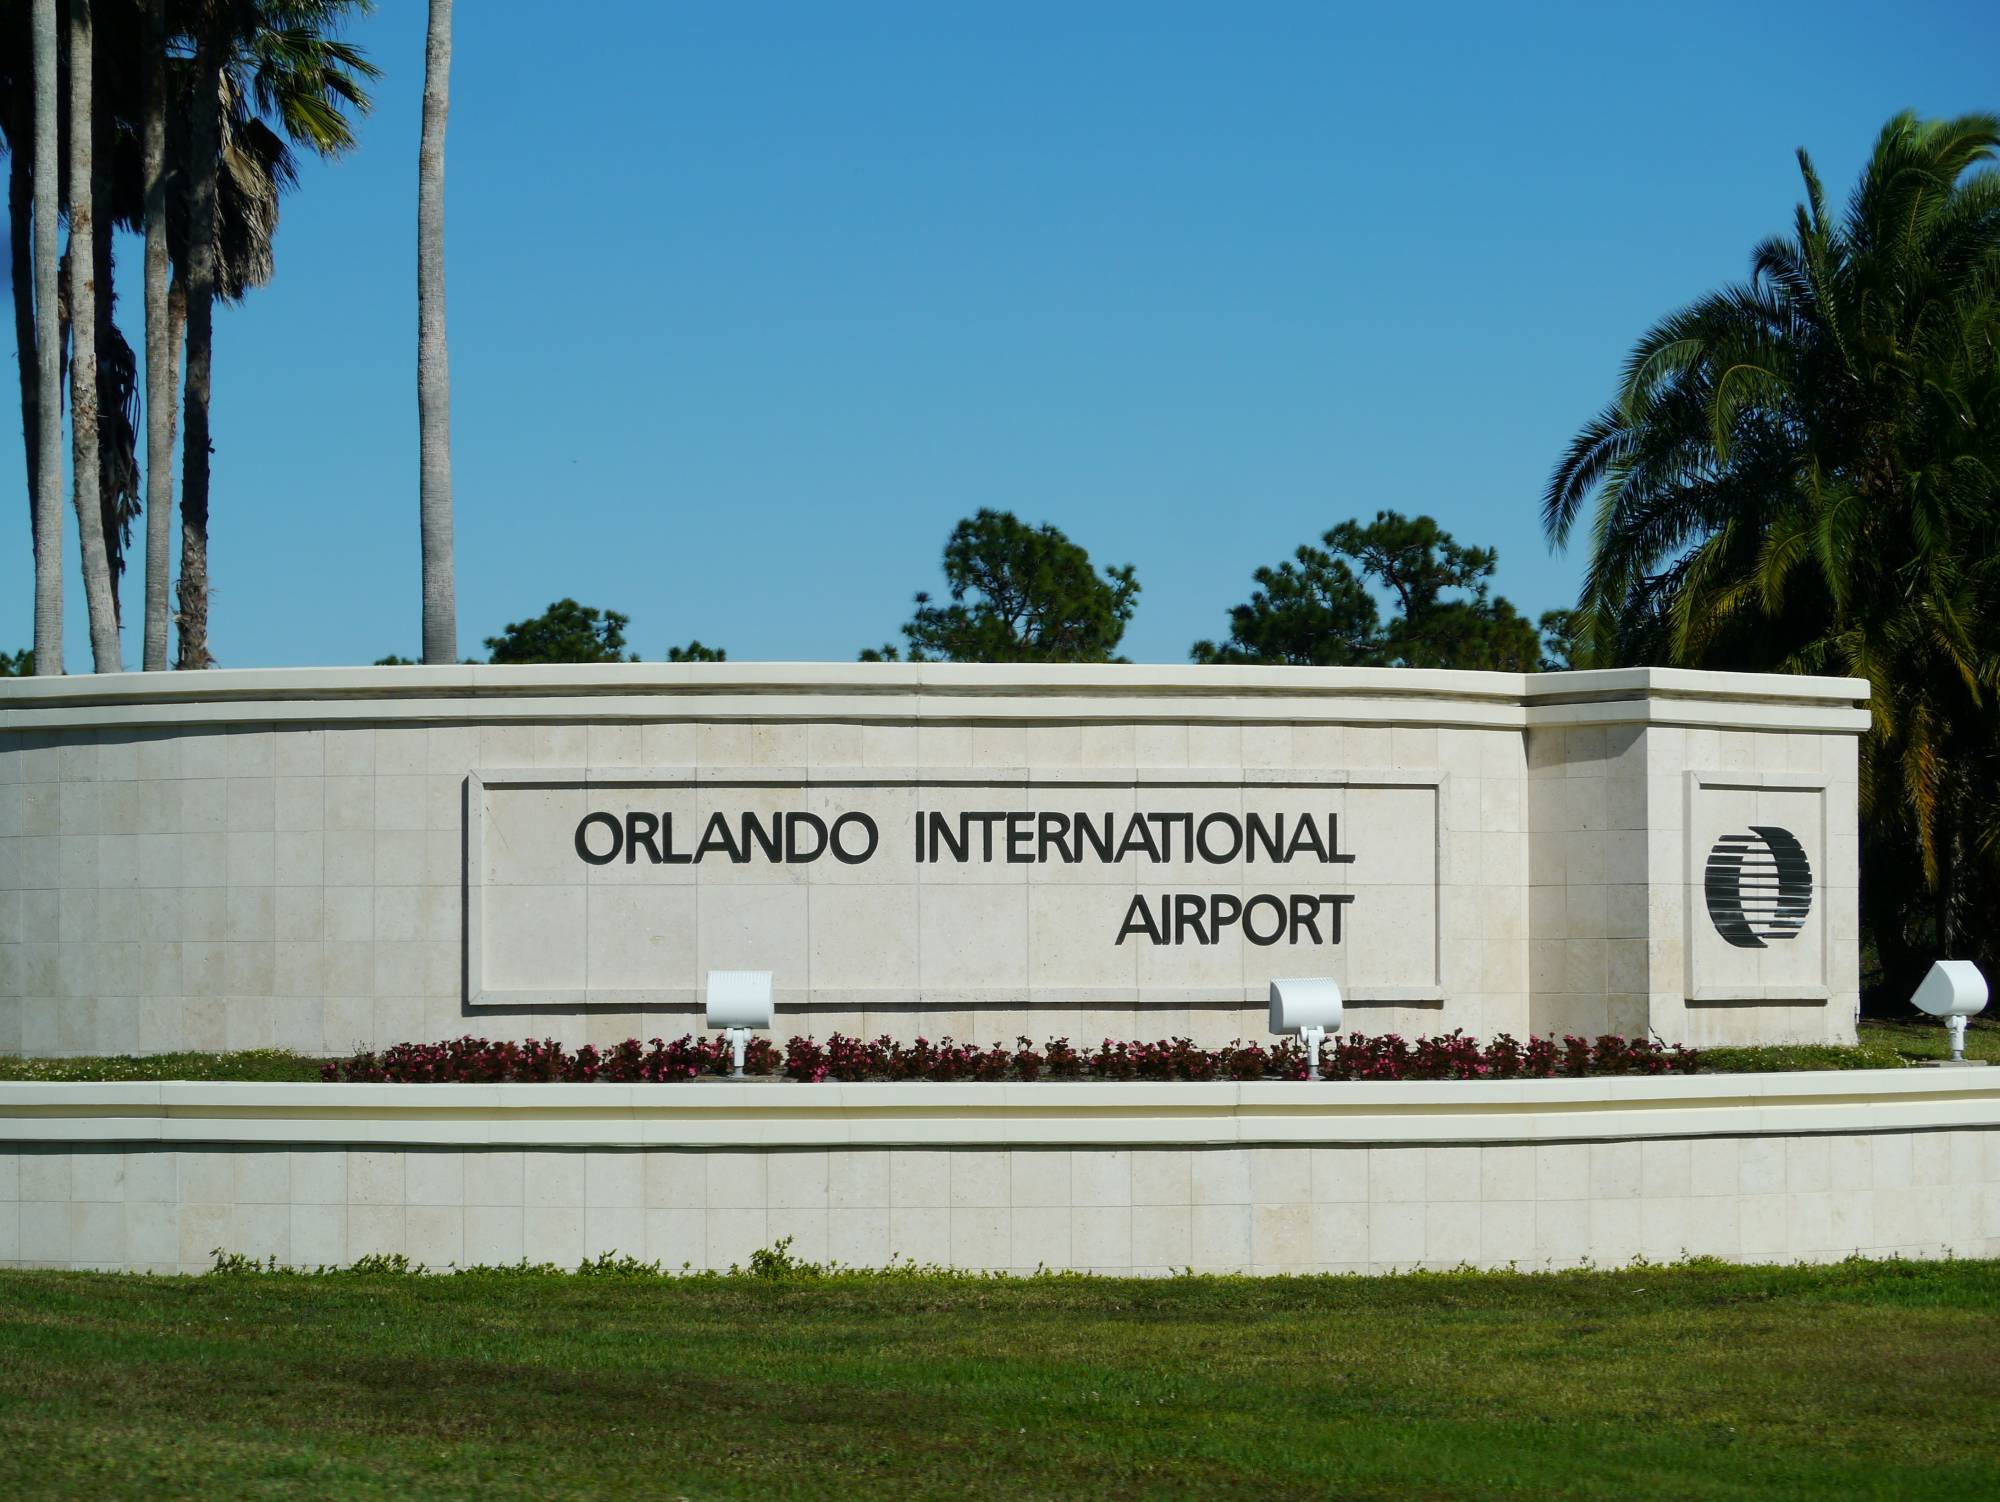 Orlando International Airport - sign